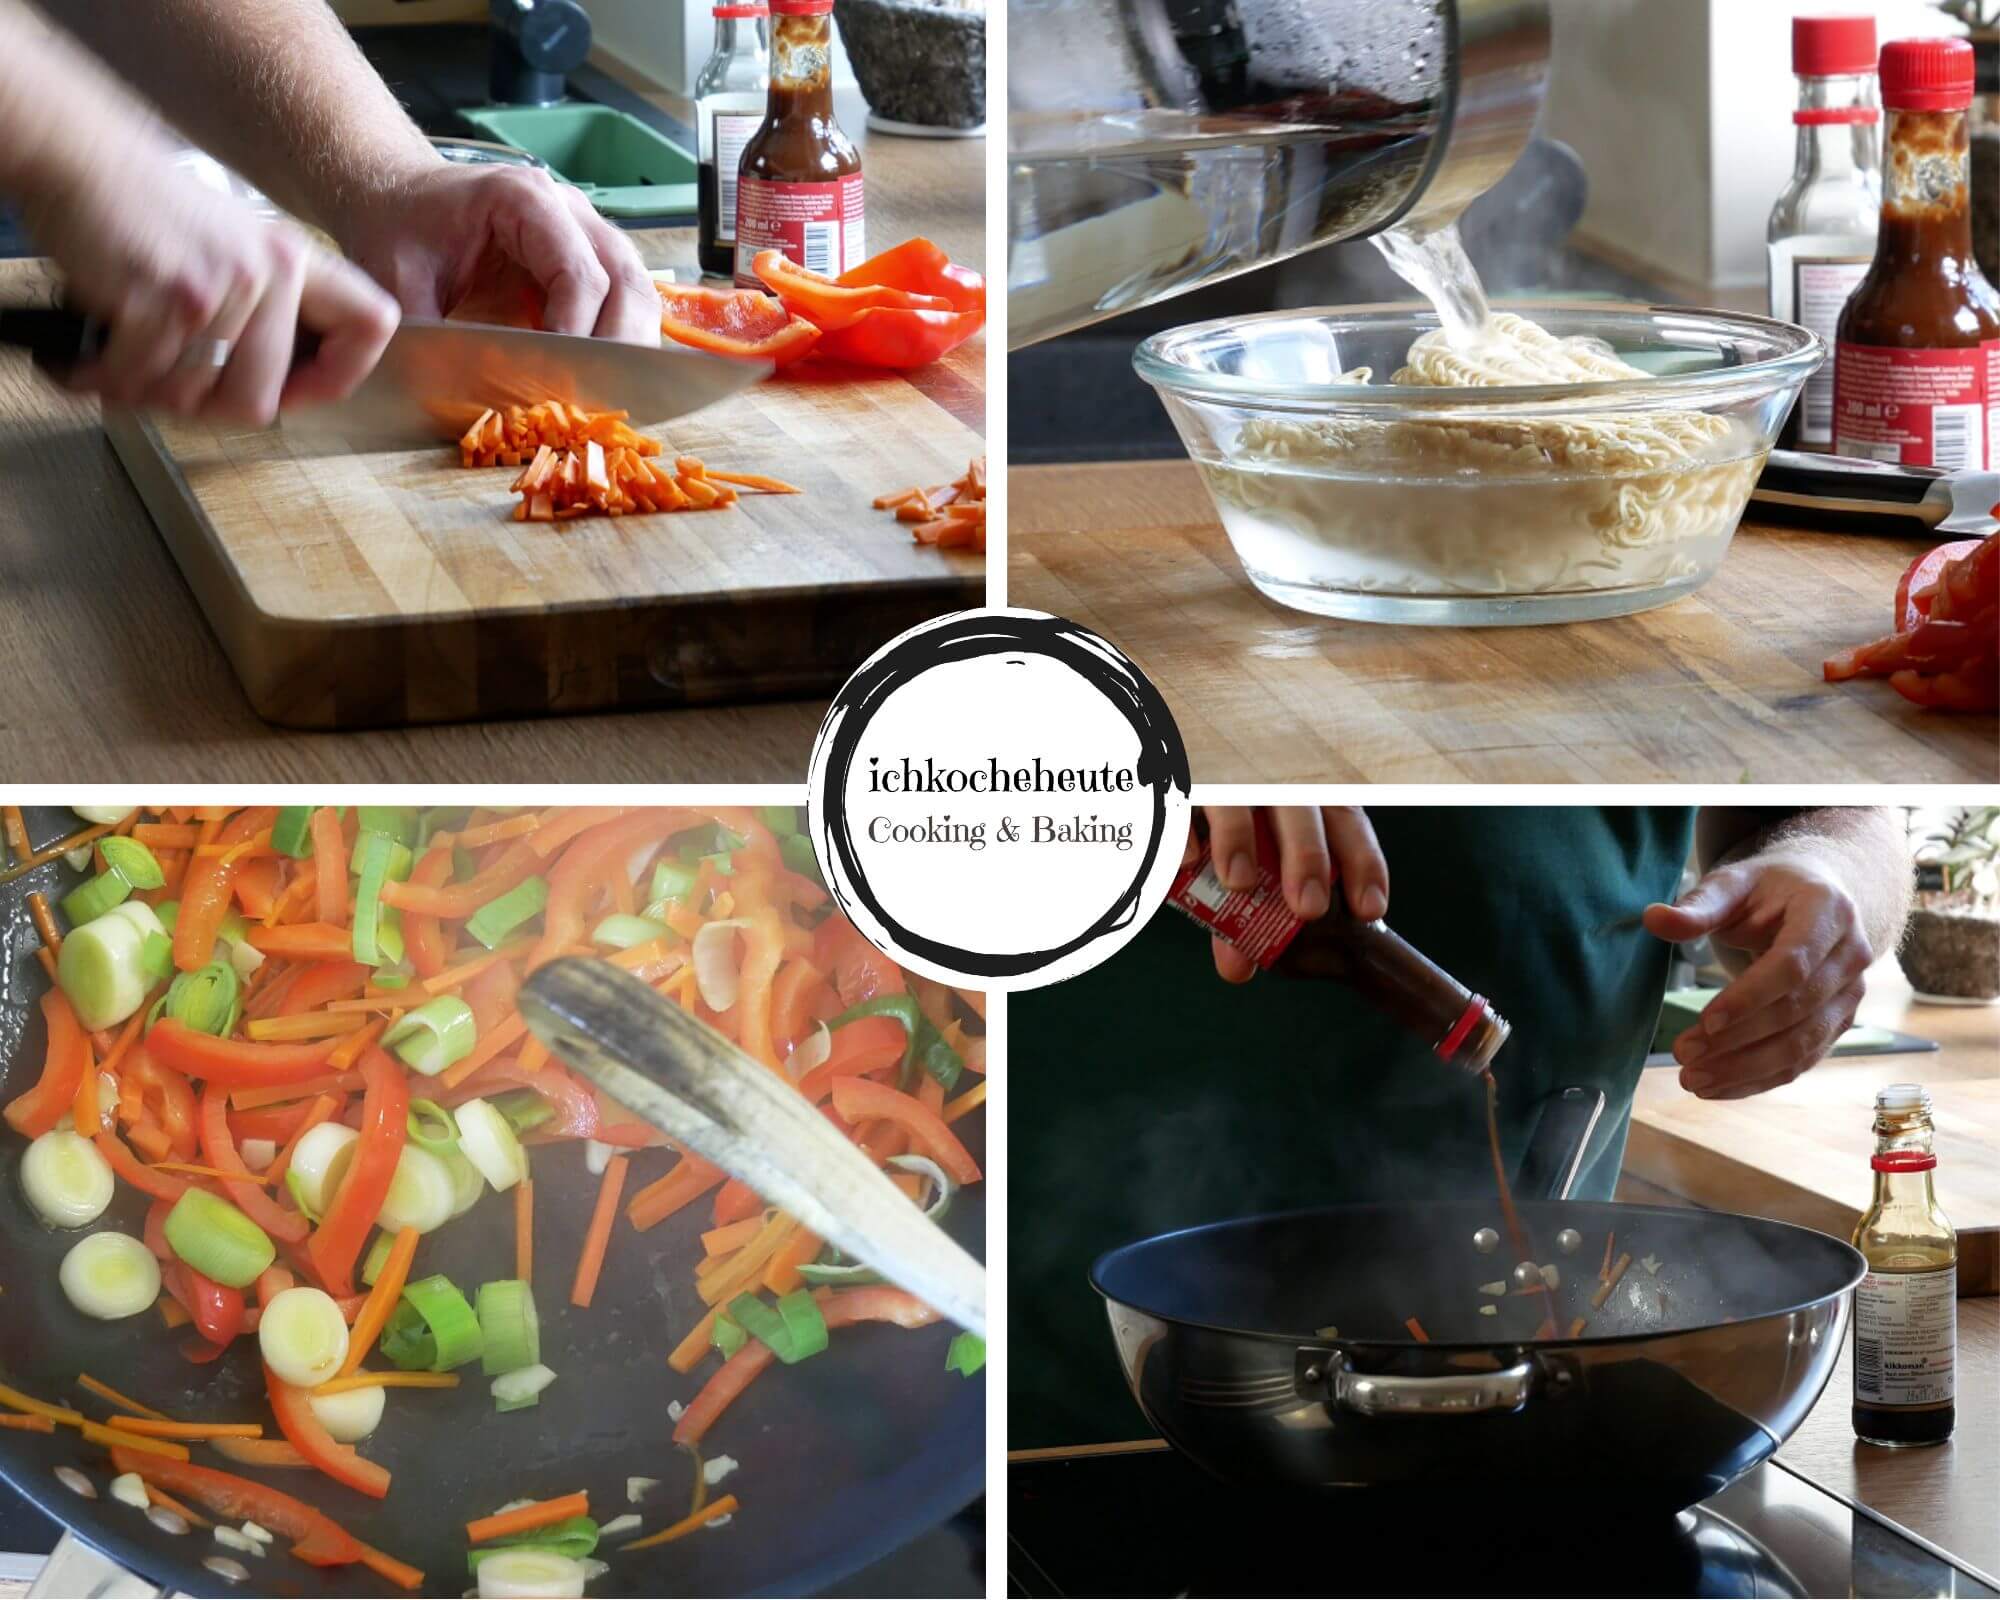 Preparations for Mie Noodle Wok Stir-Fry with Hoisin Sauce